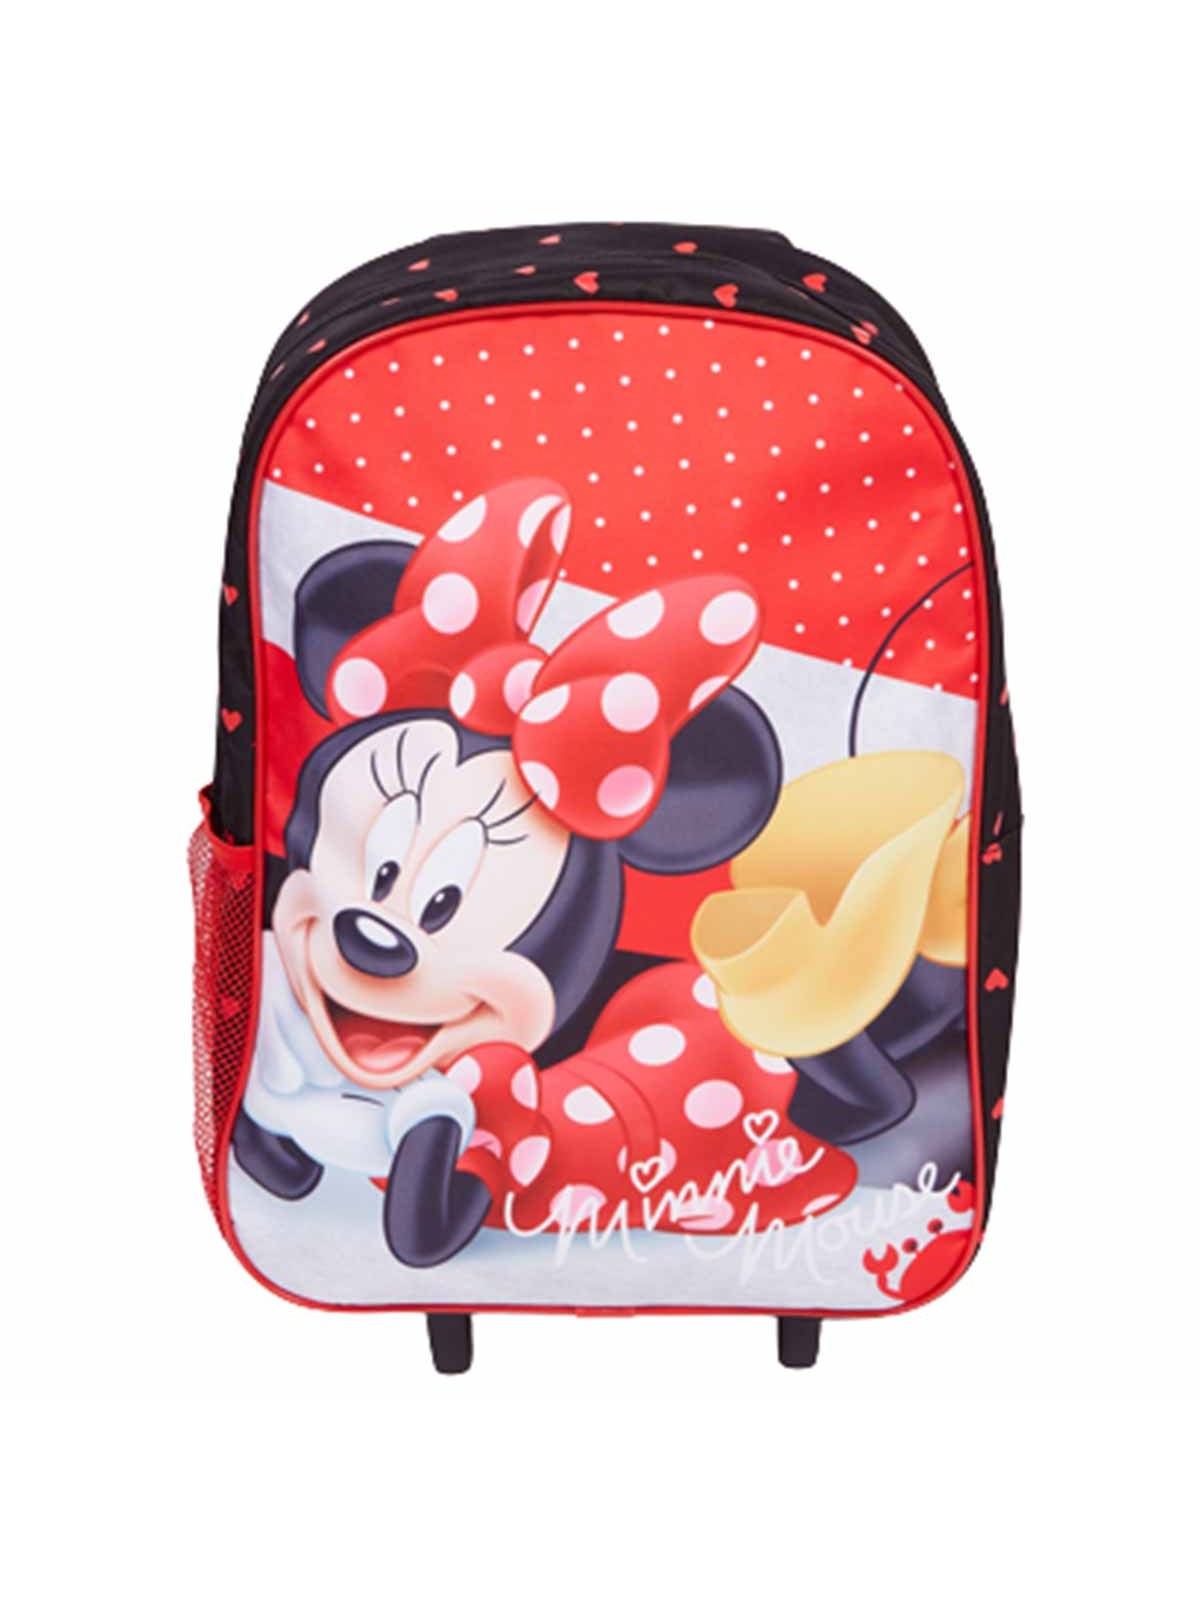 Minnie Schoolbag with wheels